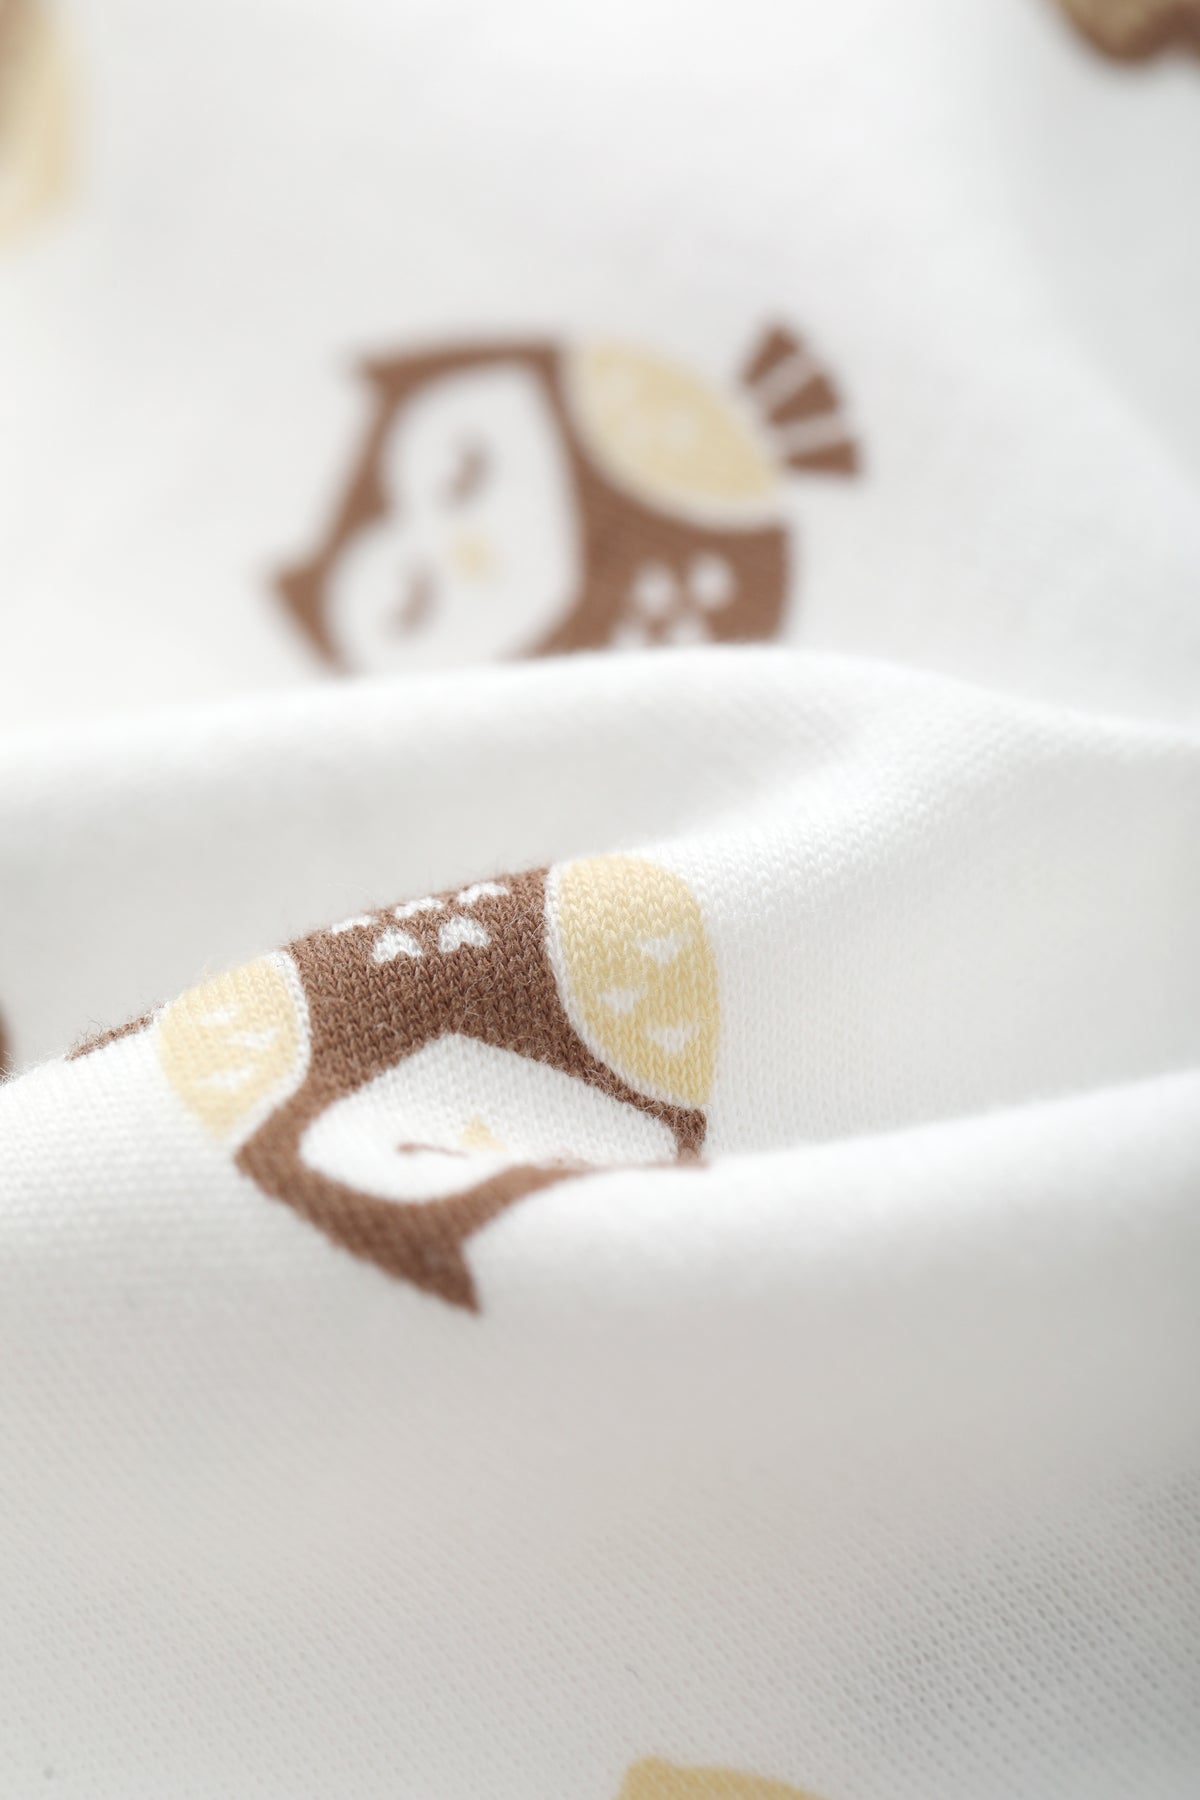 Vauva BBNS - Baby Anti-bacterial Organic Cotton Bodysuits (2-pack)